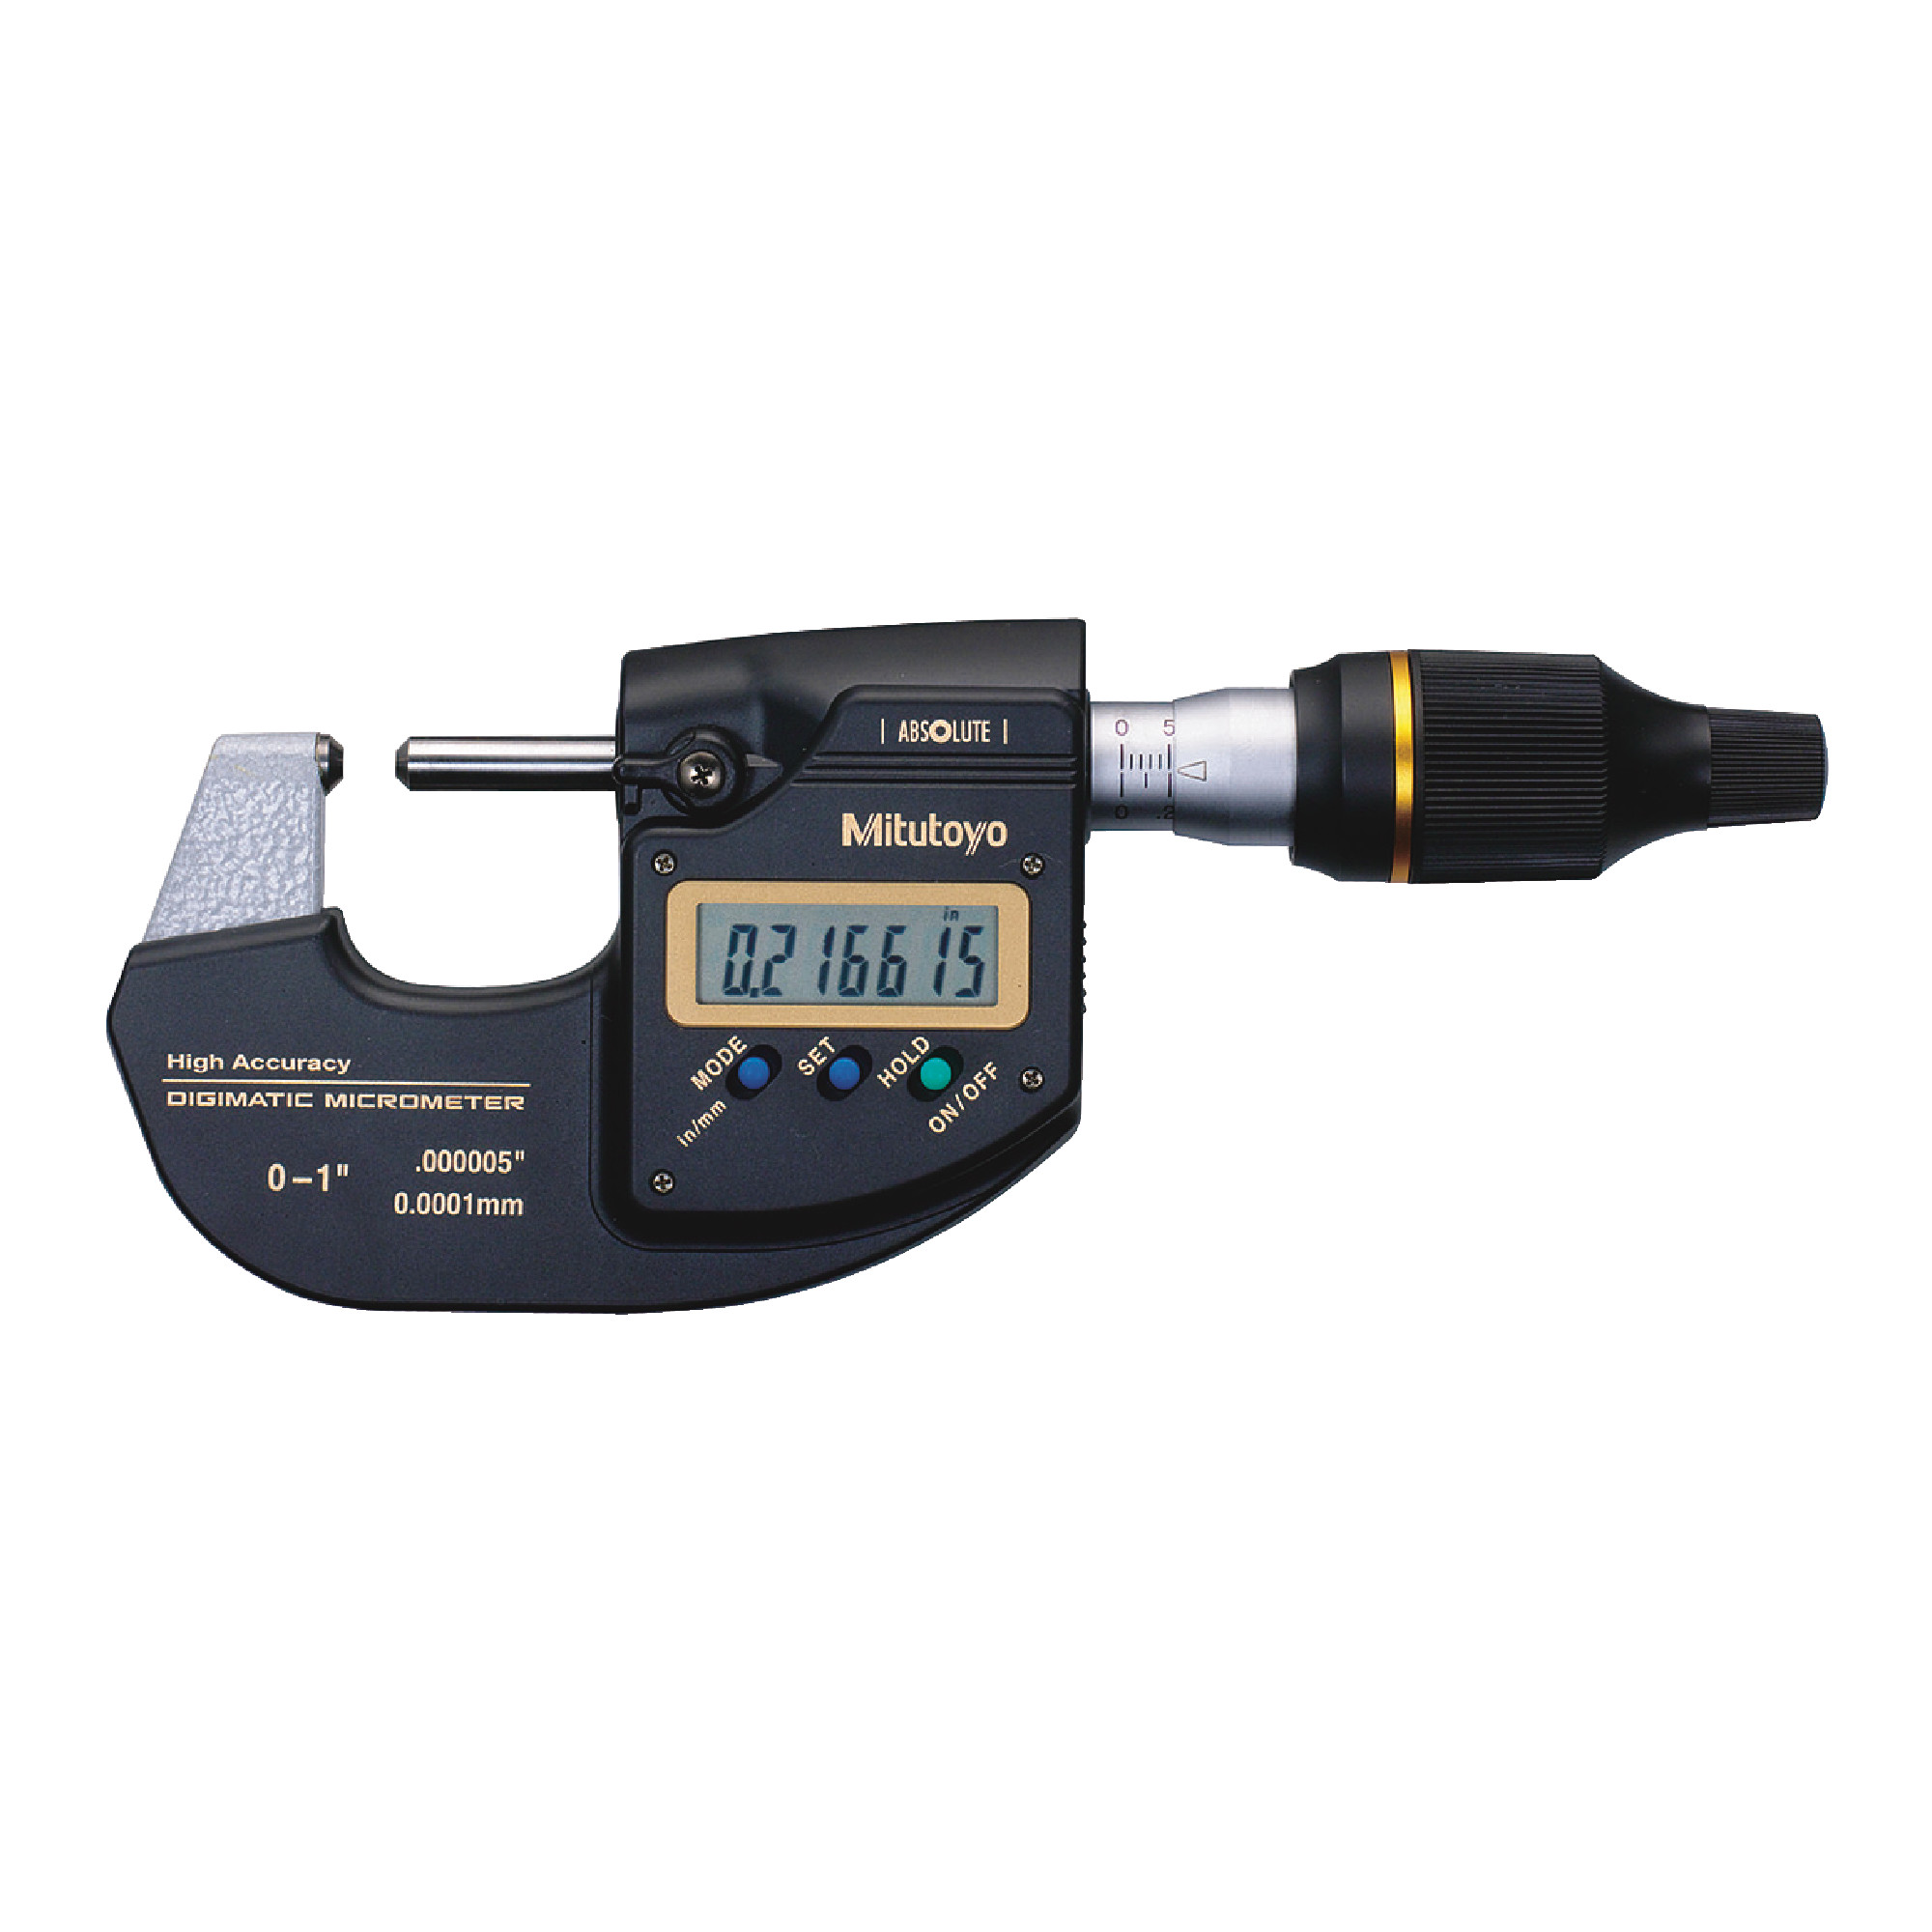 High Accuracy Digital Micrometer